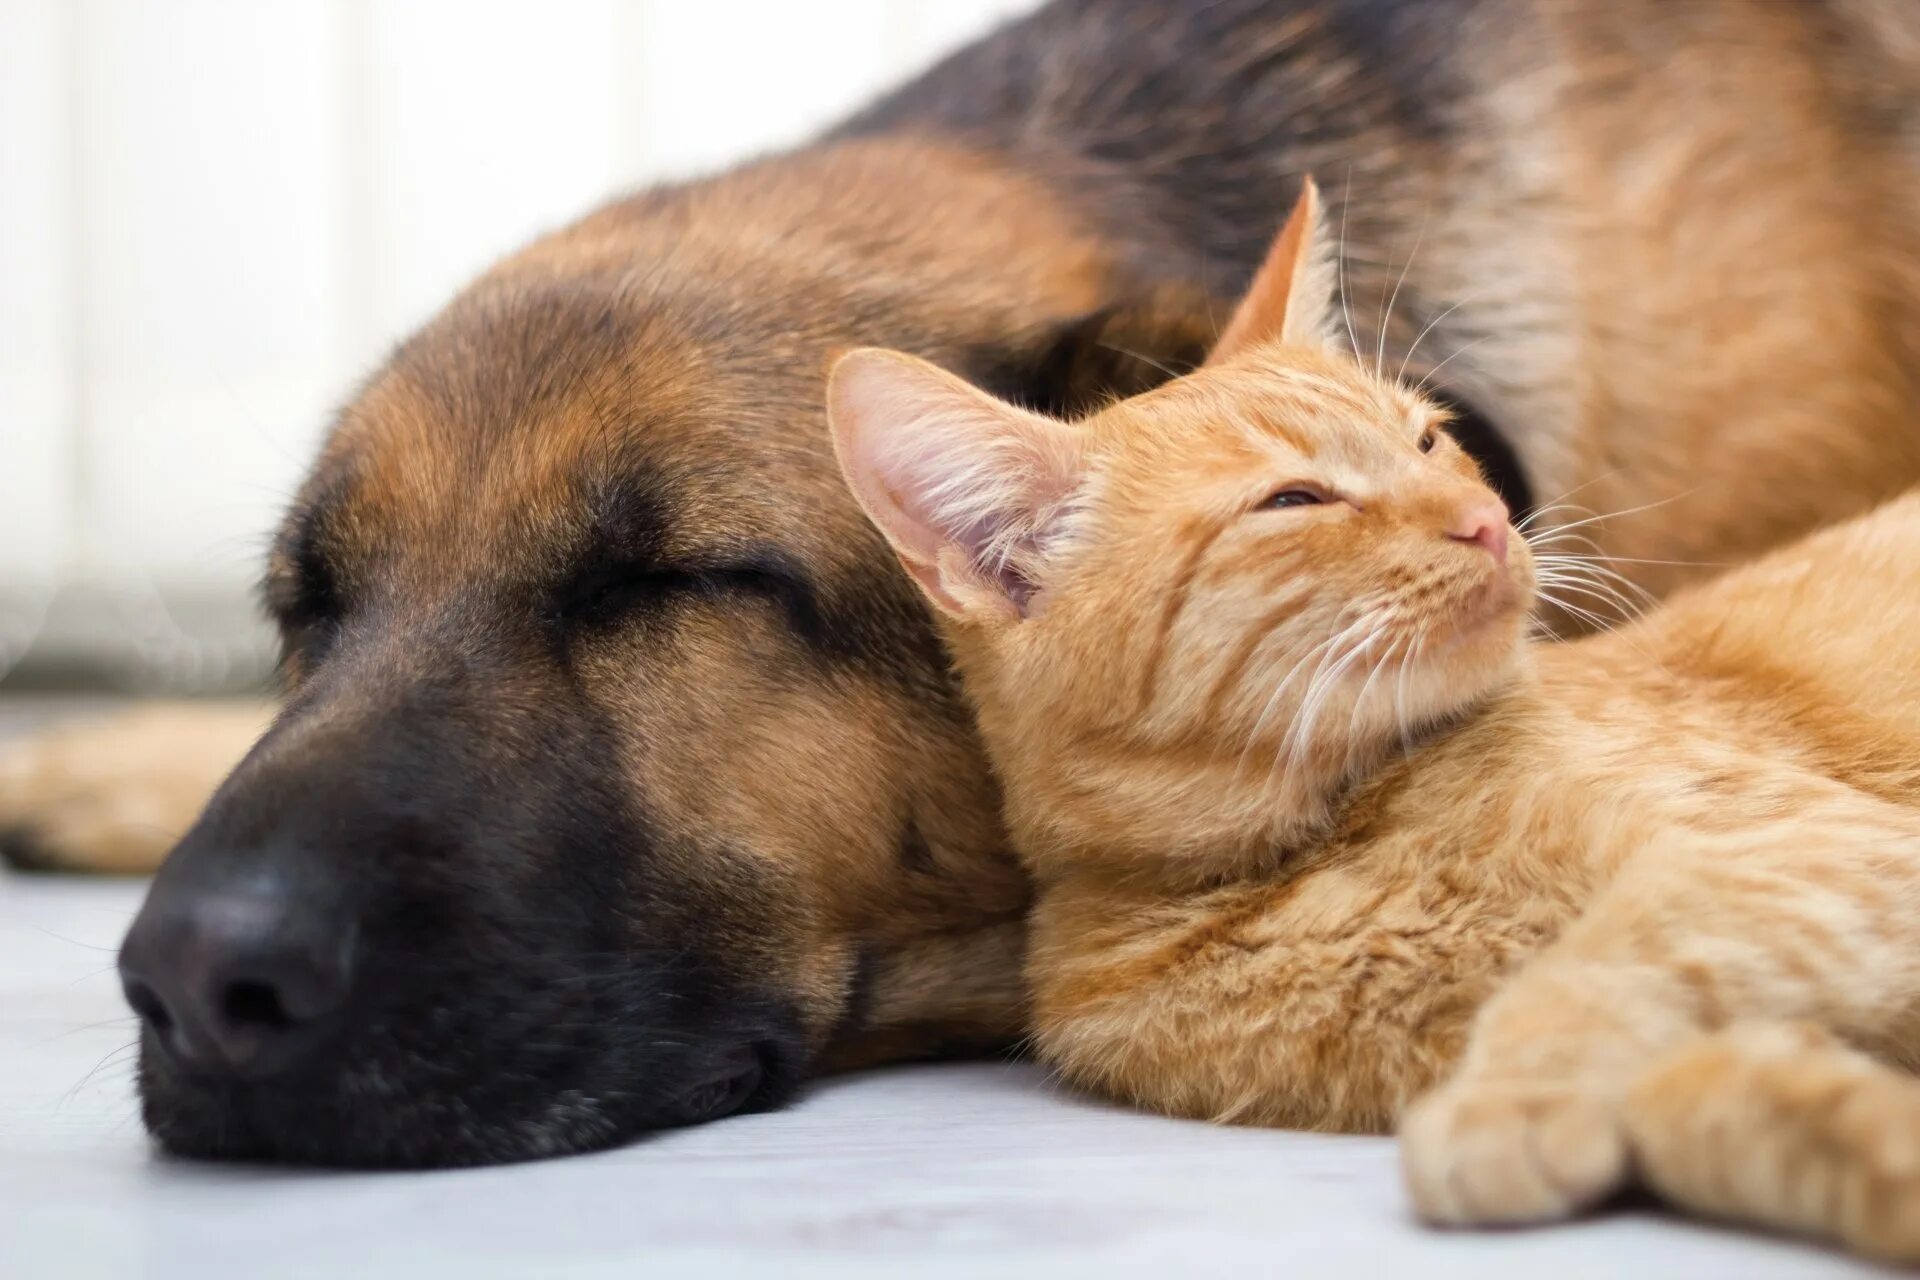 Cat dog 18. Кошки и собаки. Собака и кошка вместе. Красивые собаки и кошки. Котики и собачки фото.